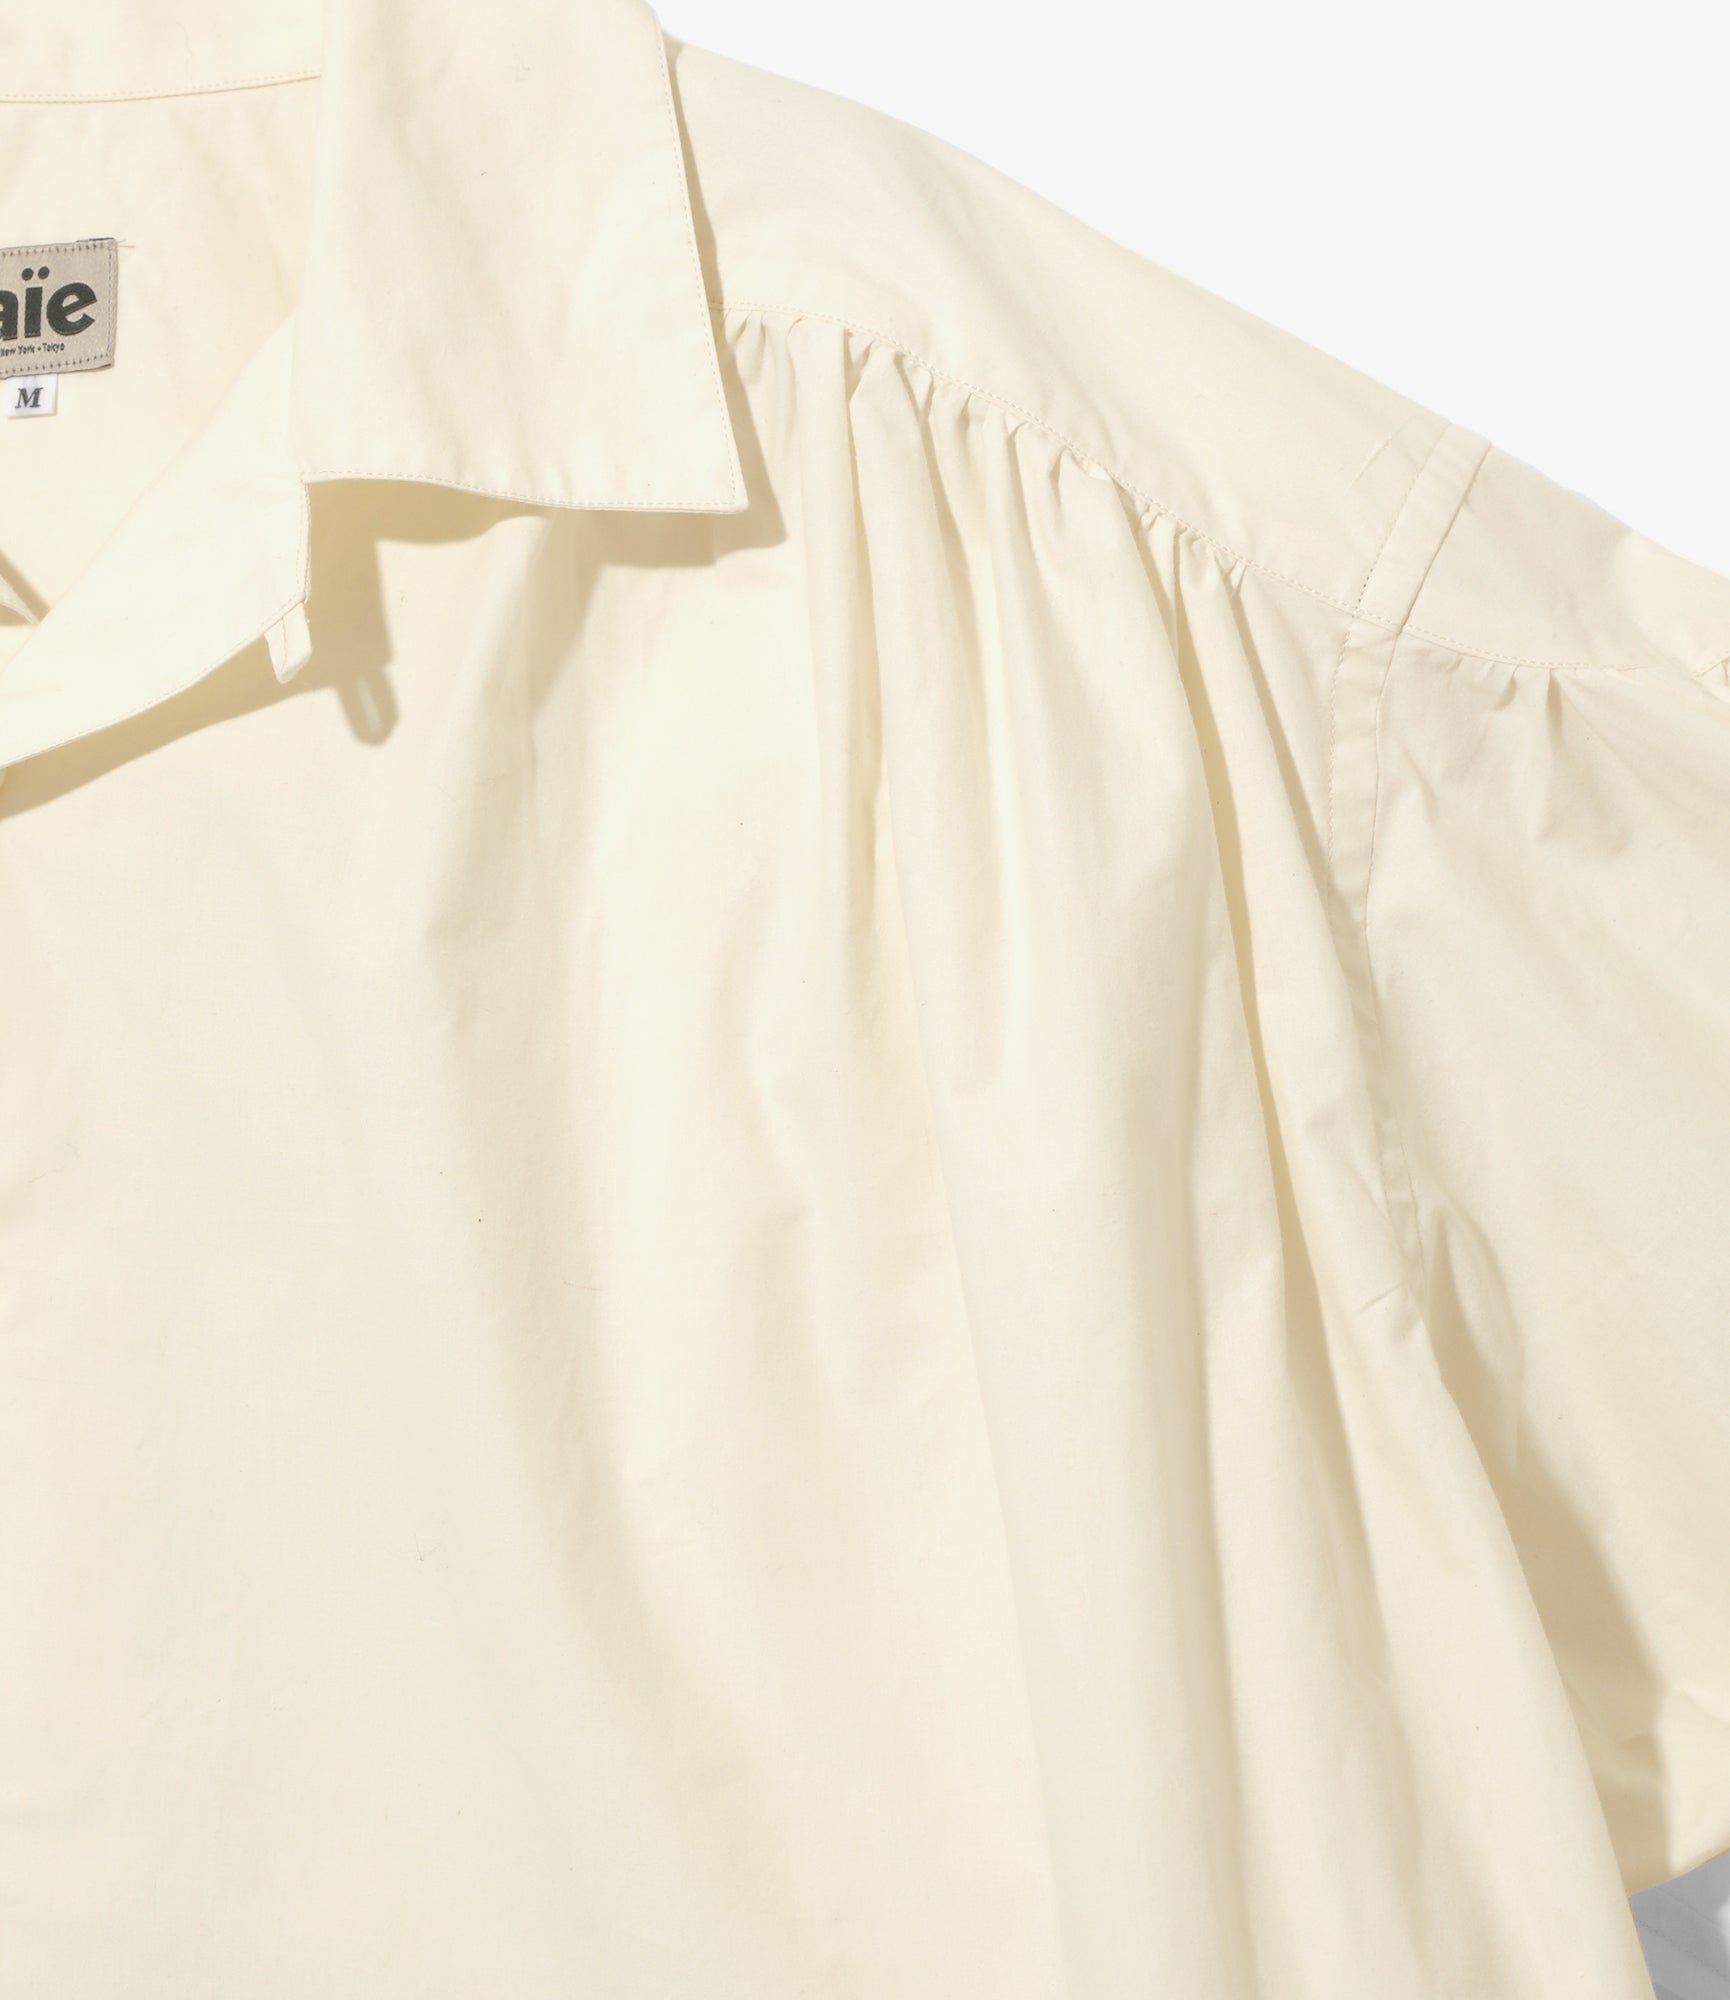 AIE Painter Shirt - Cotton Cloth / Iridescent - Off White